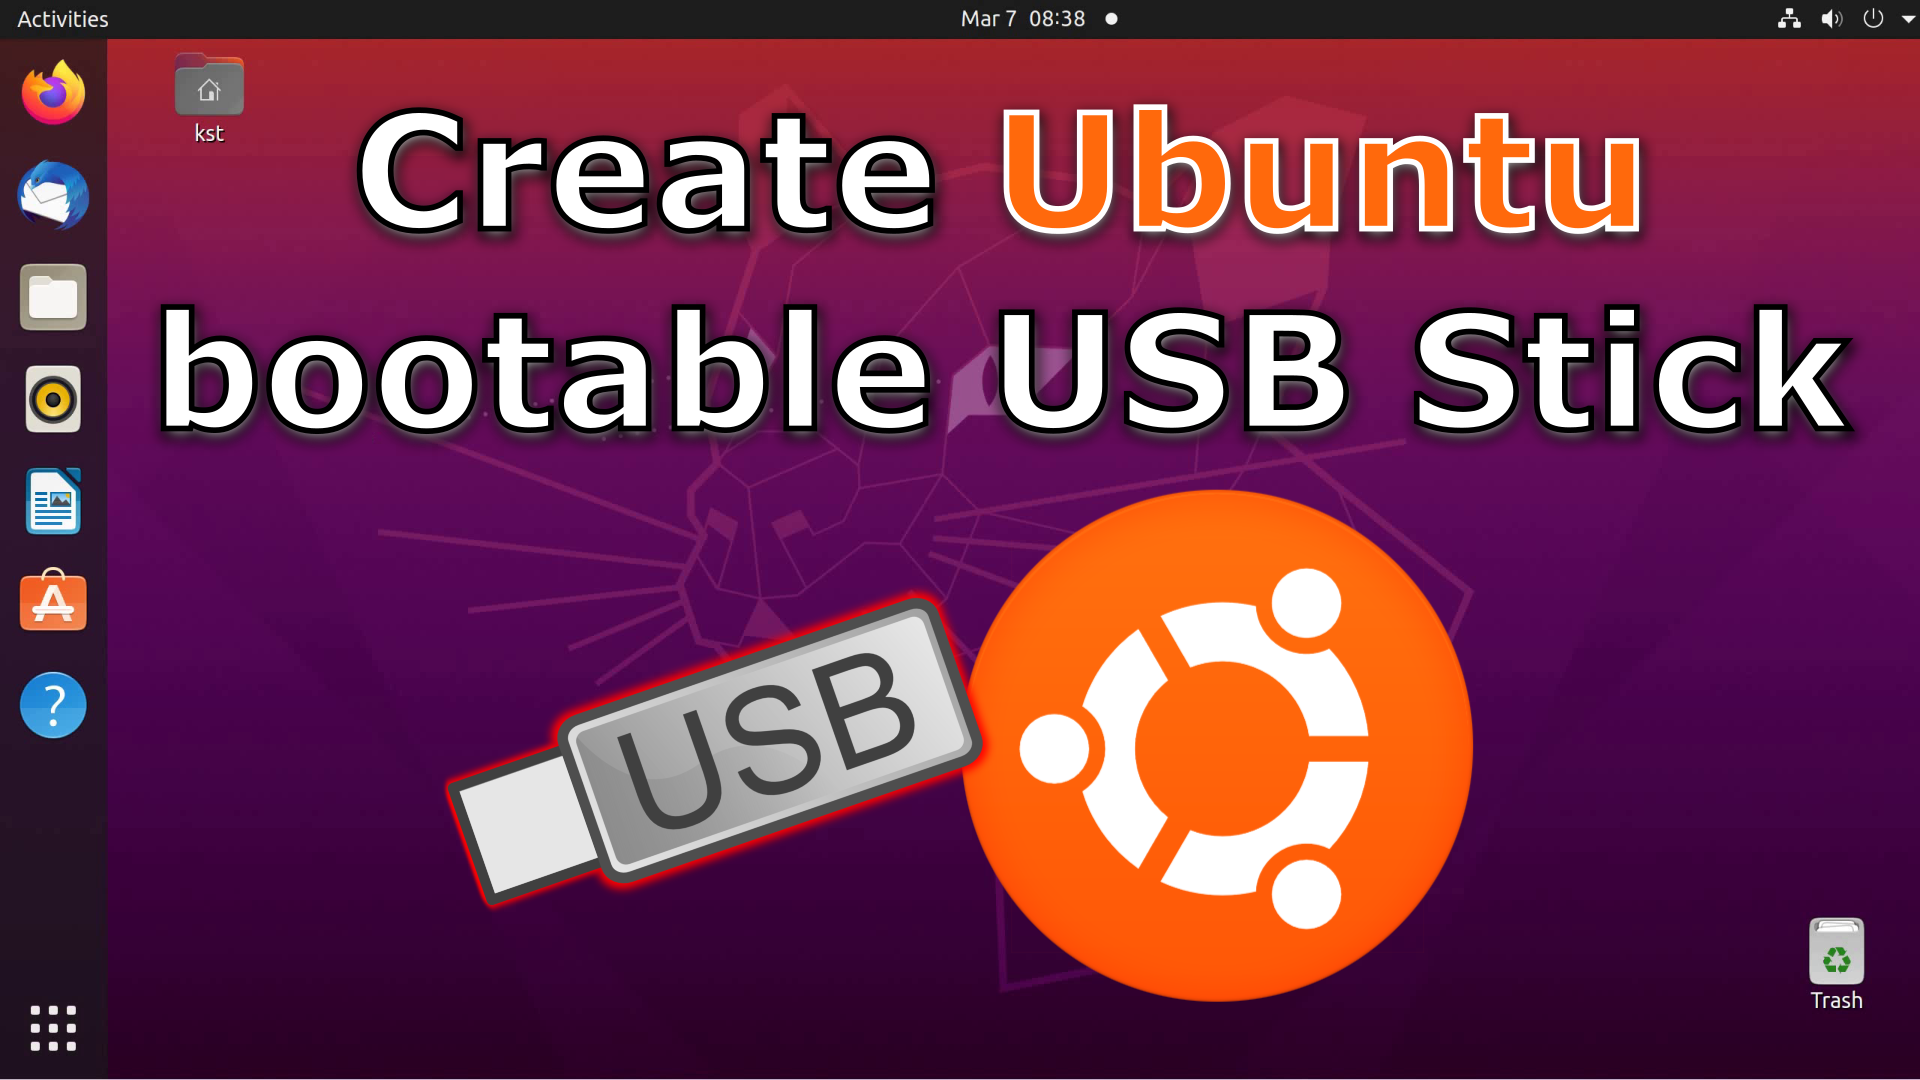 Create Ubuntu USB